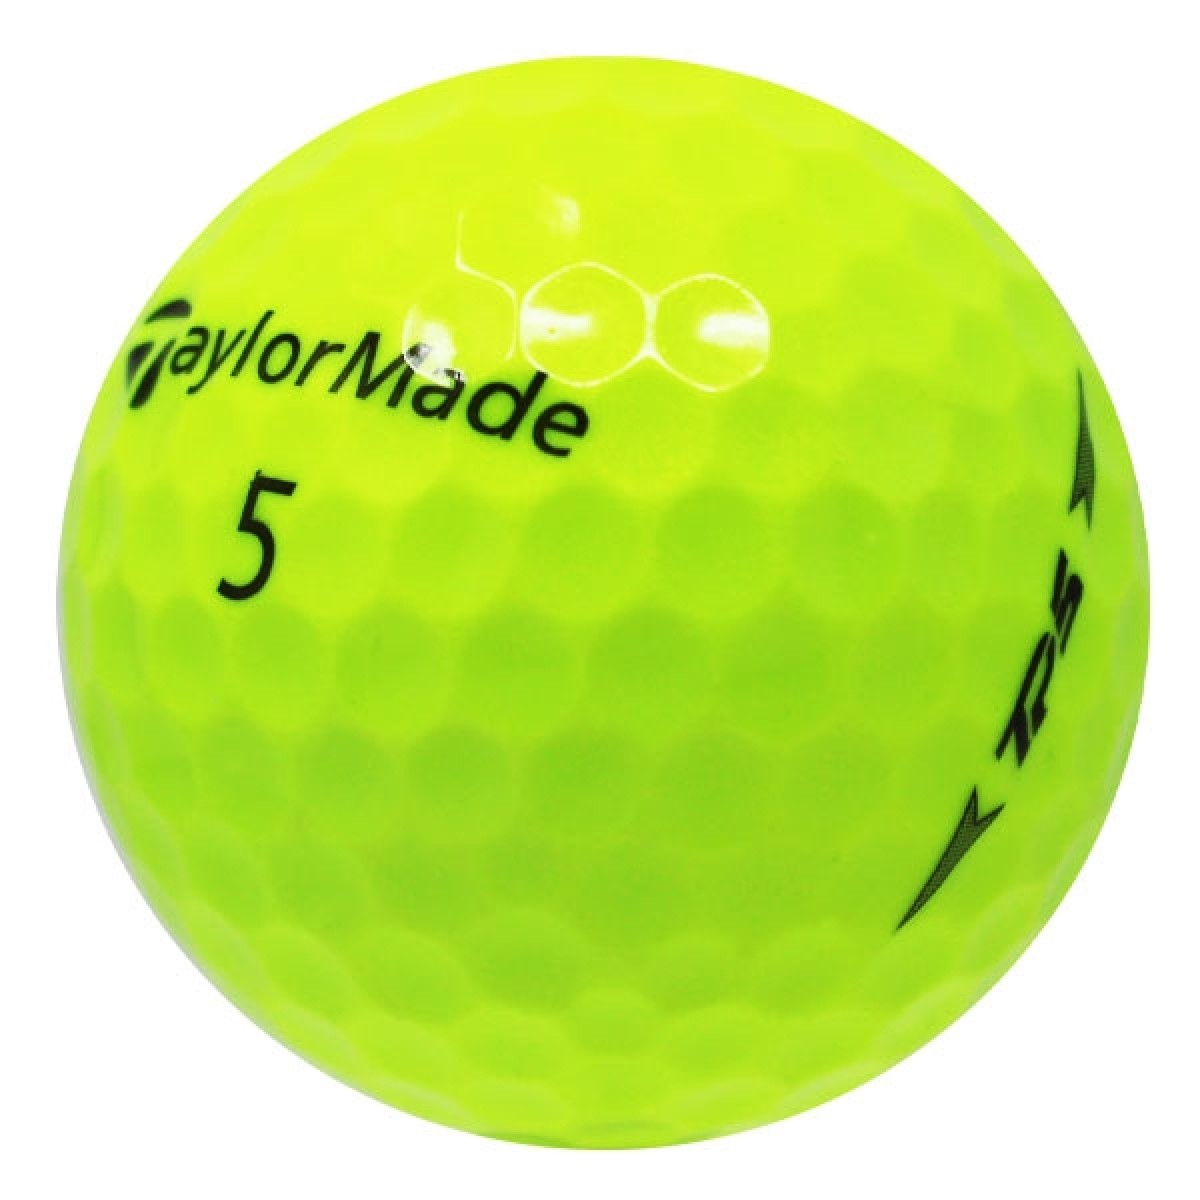 TaylorMade TP5 Yellow Used Golf Balls | Lostgolfballs.com